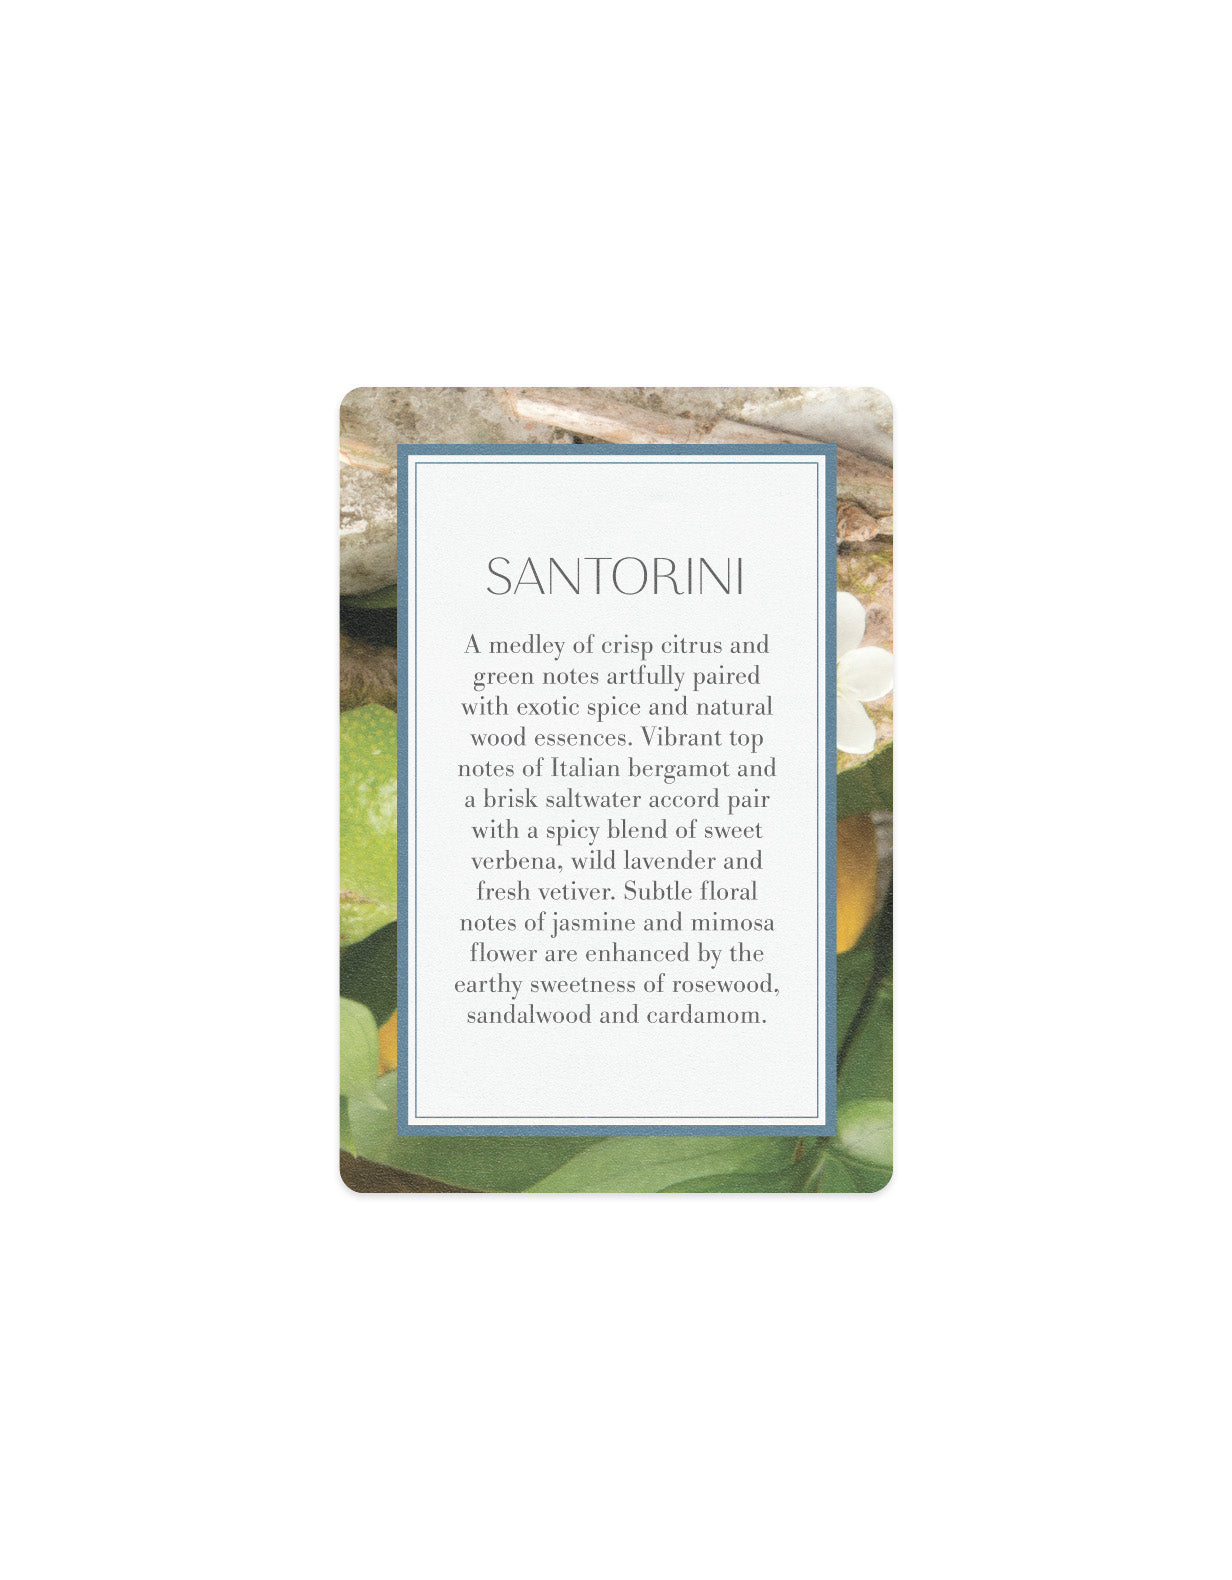 GWP - Scented Card - Santorini